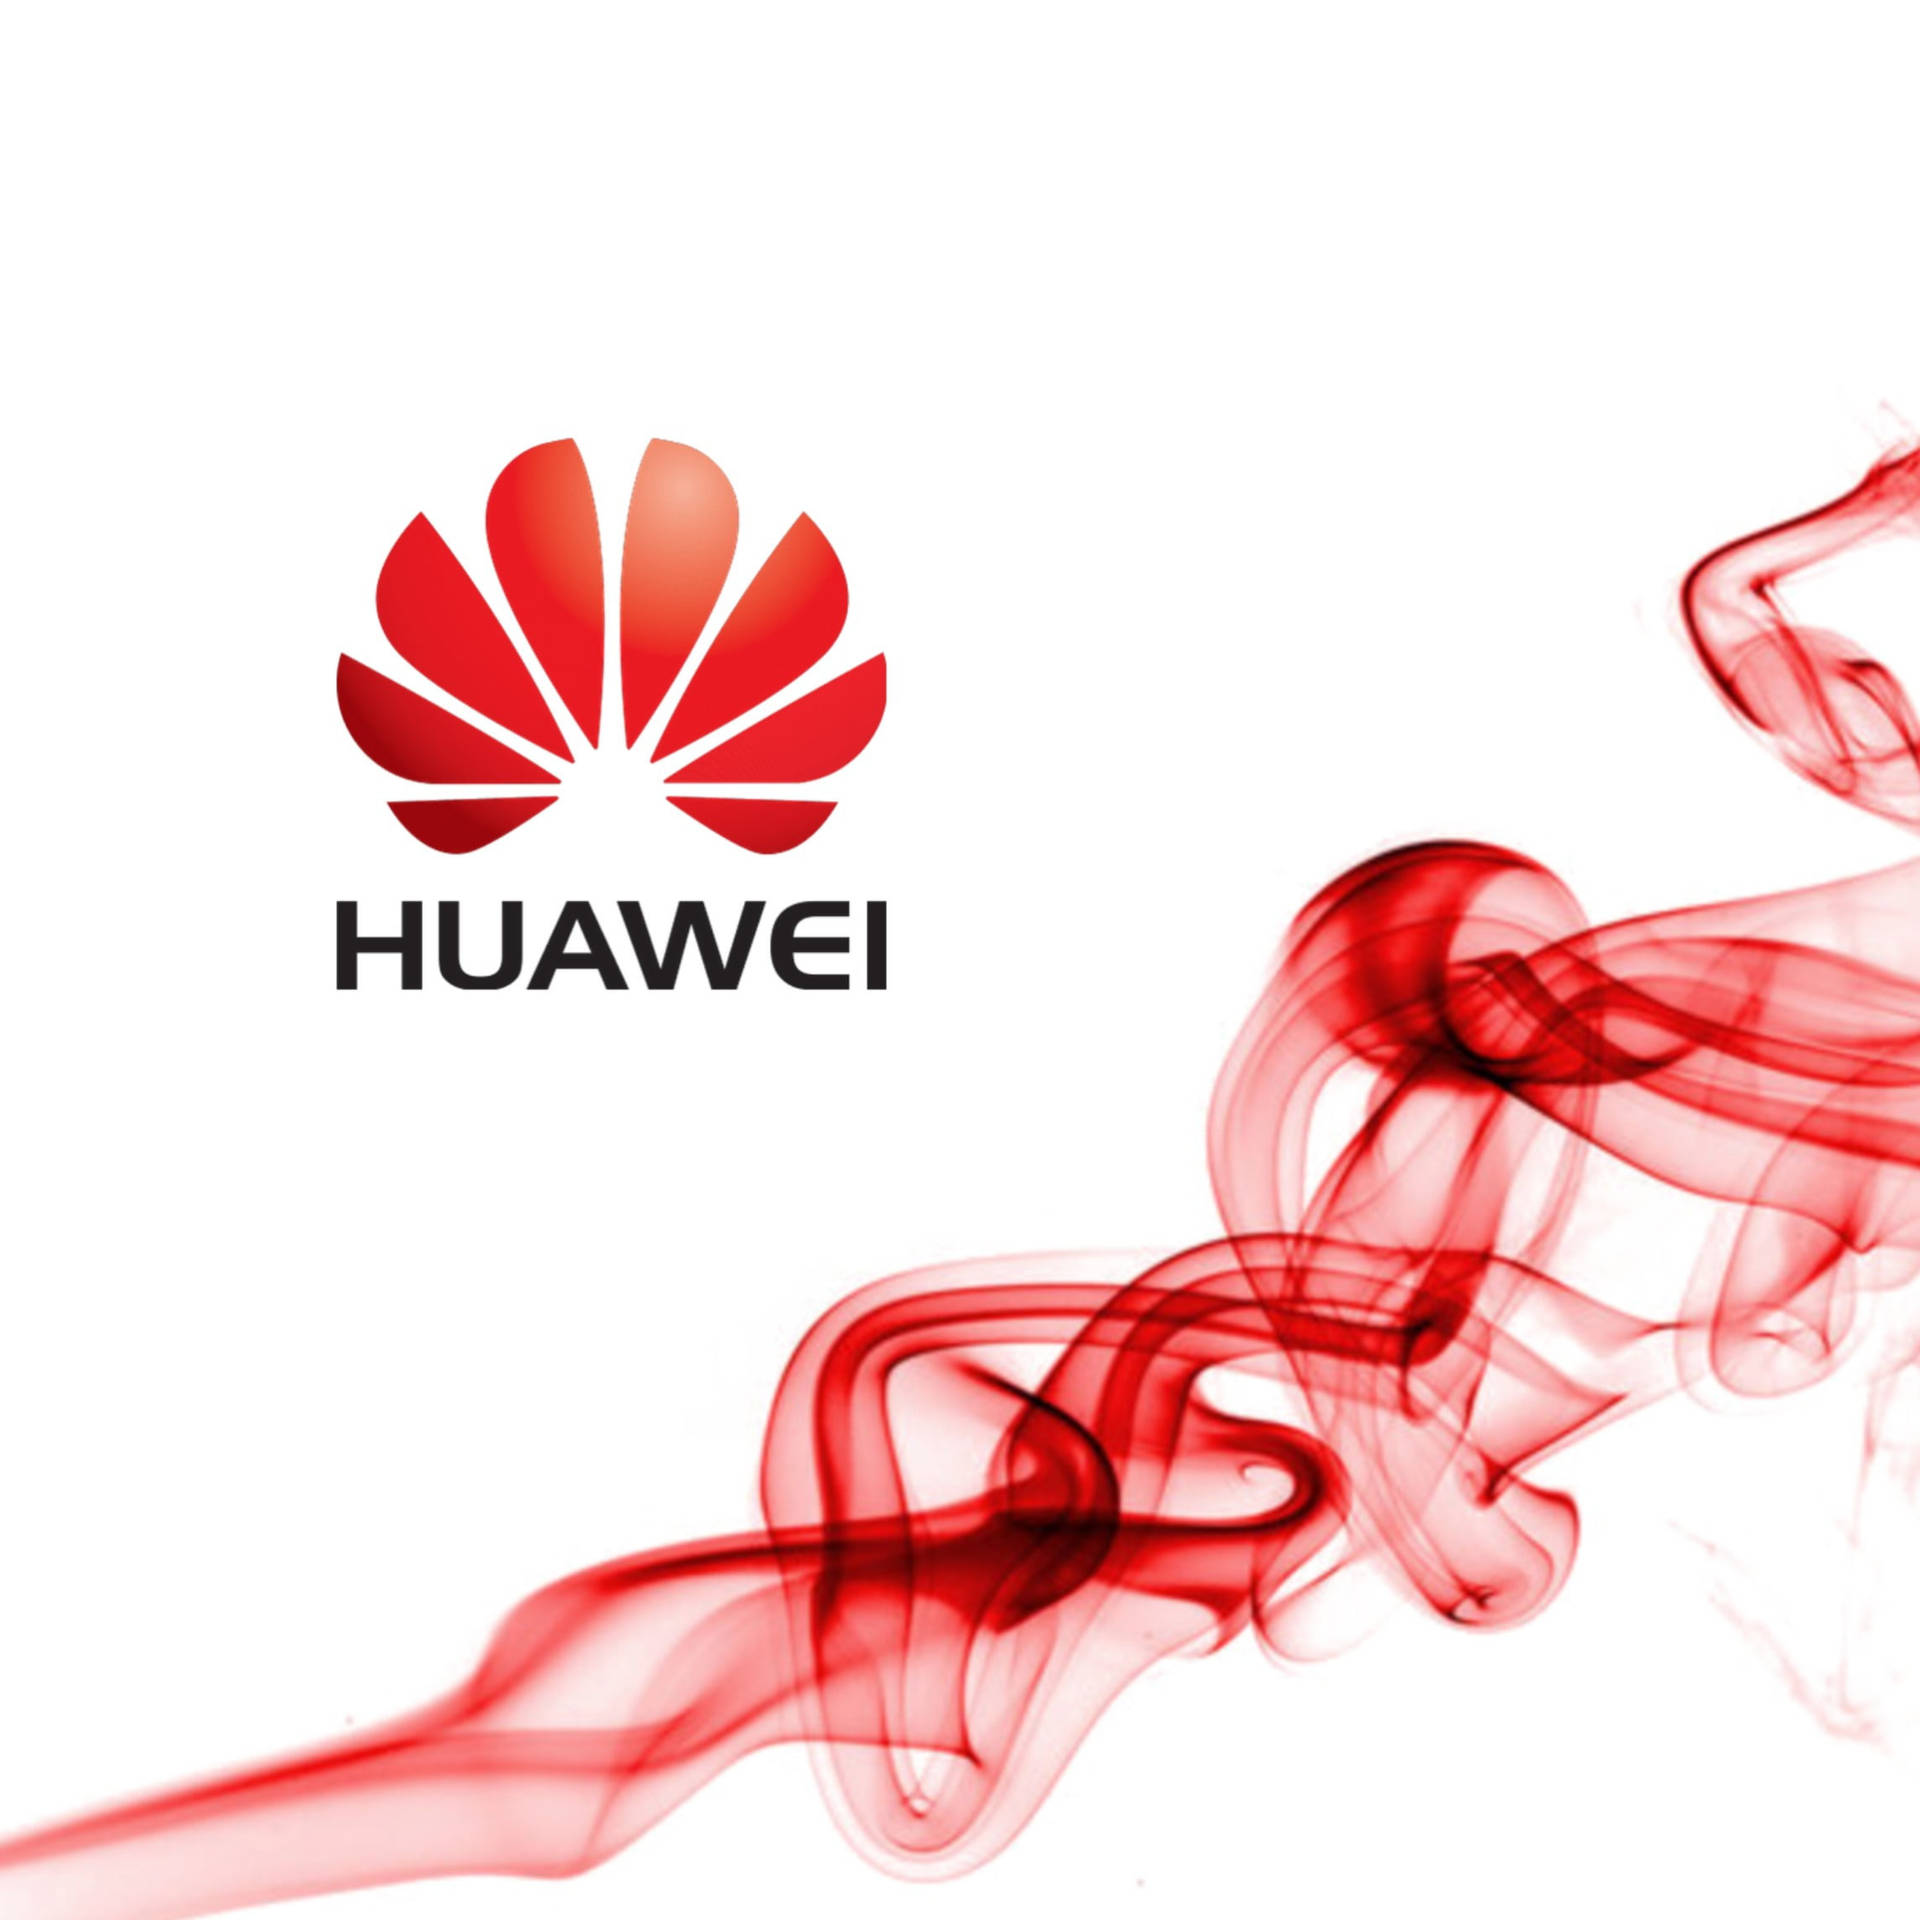 Huawei Brand Red Smoke Background